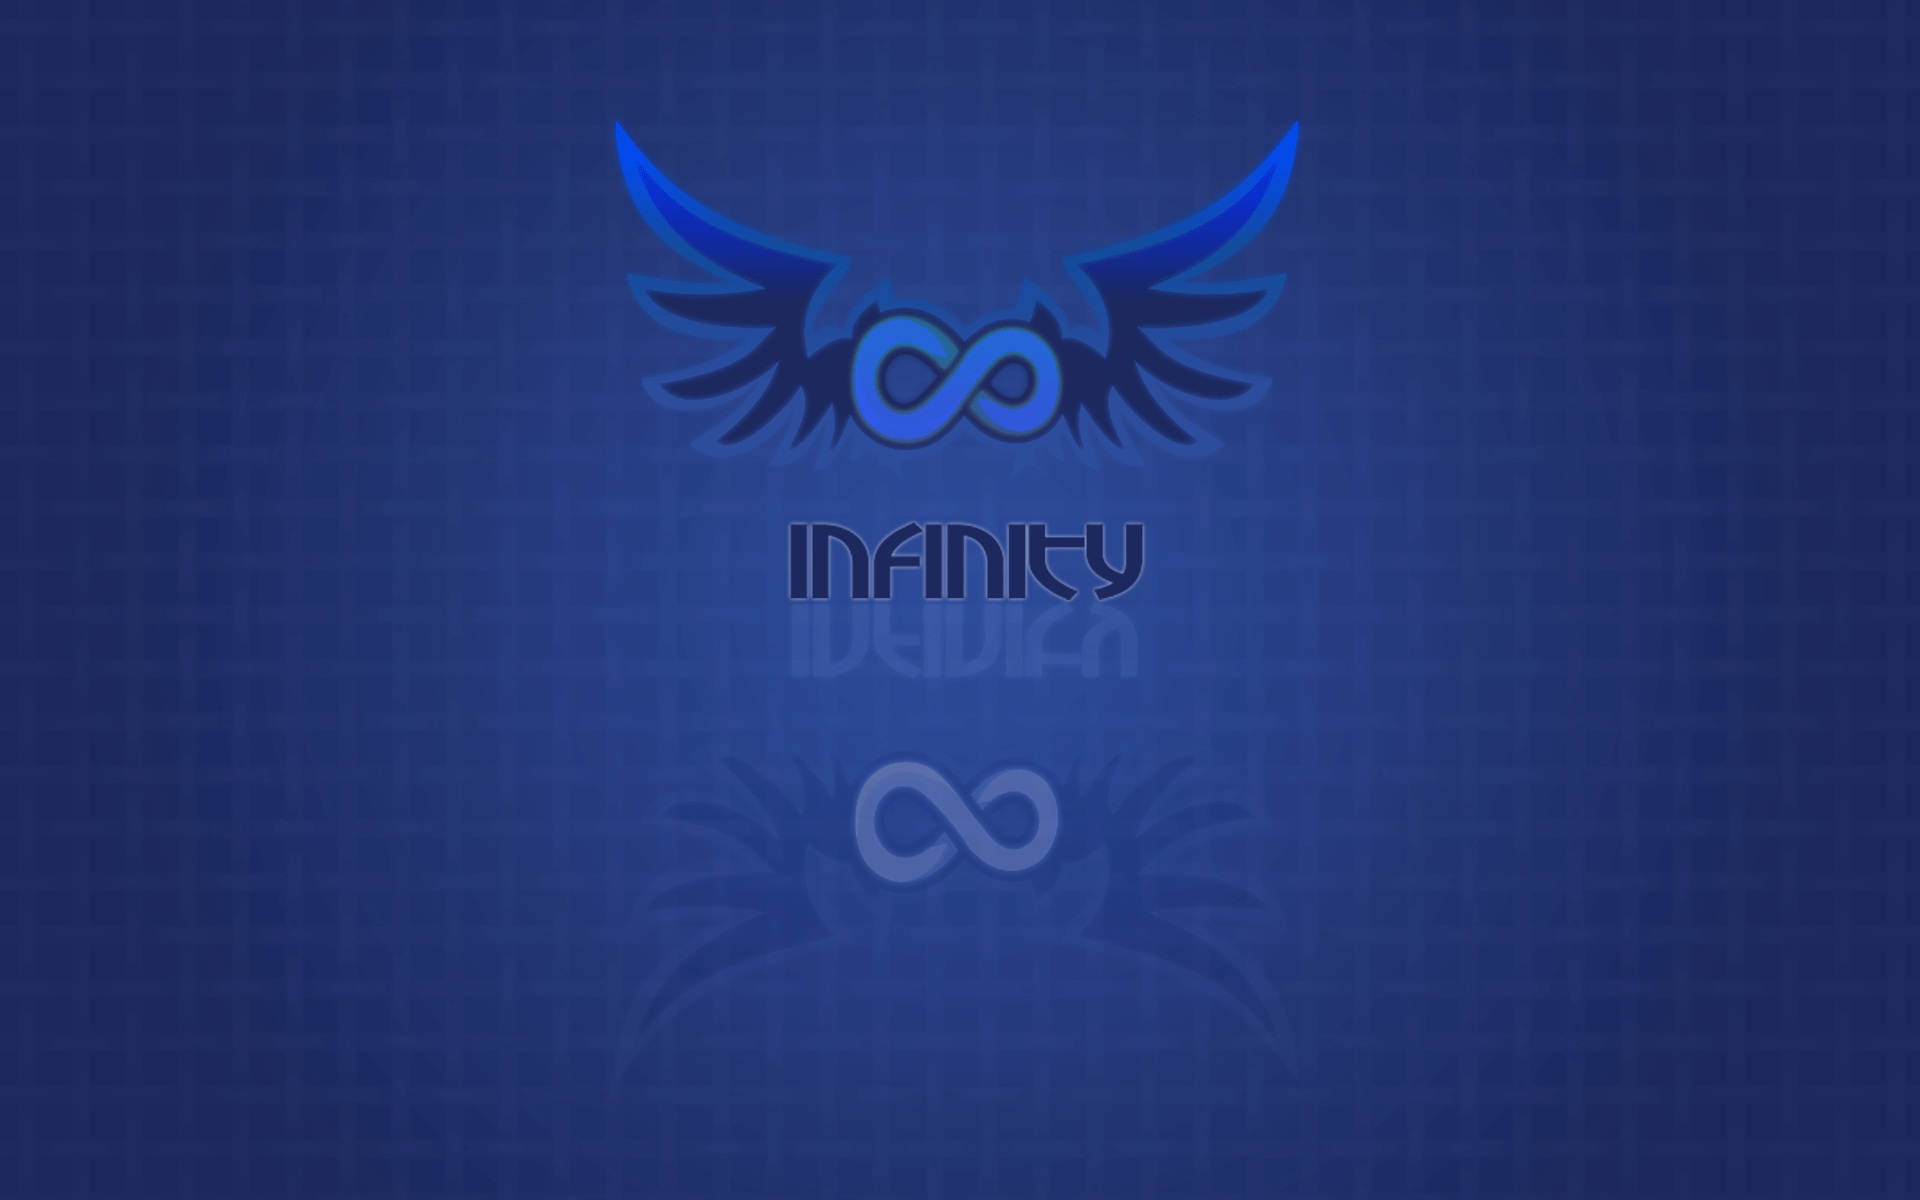 Infinity Sign - Wallpapers – yoyowall.com